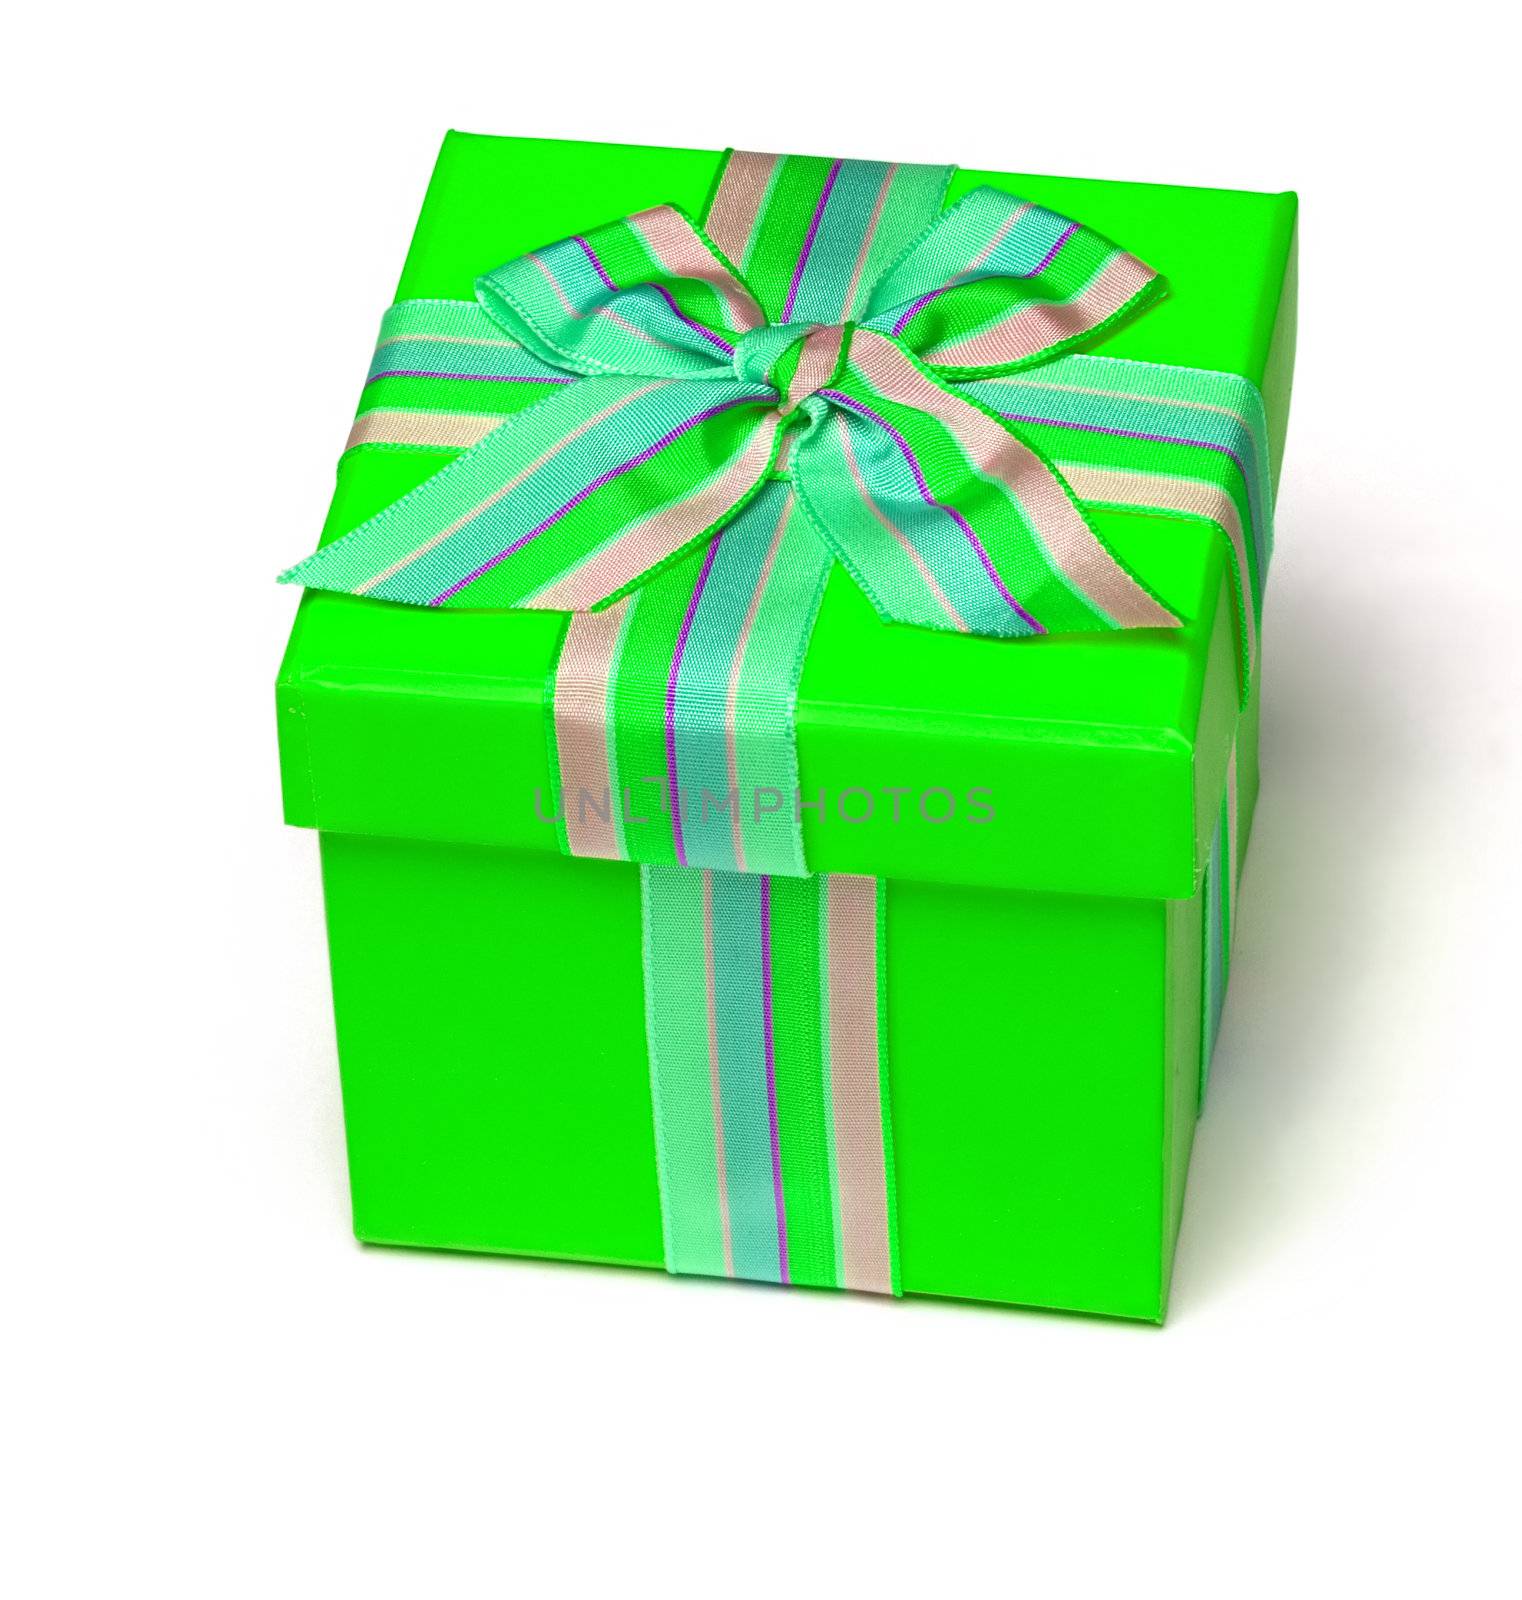 Green Gift Boxa by adamr